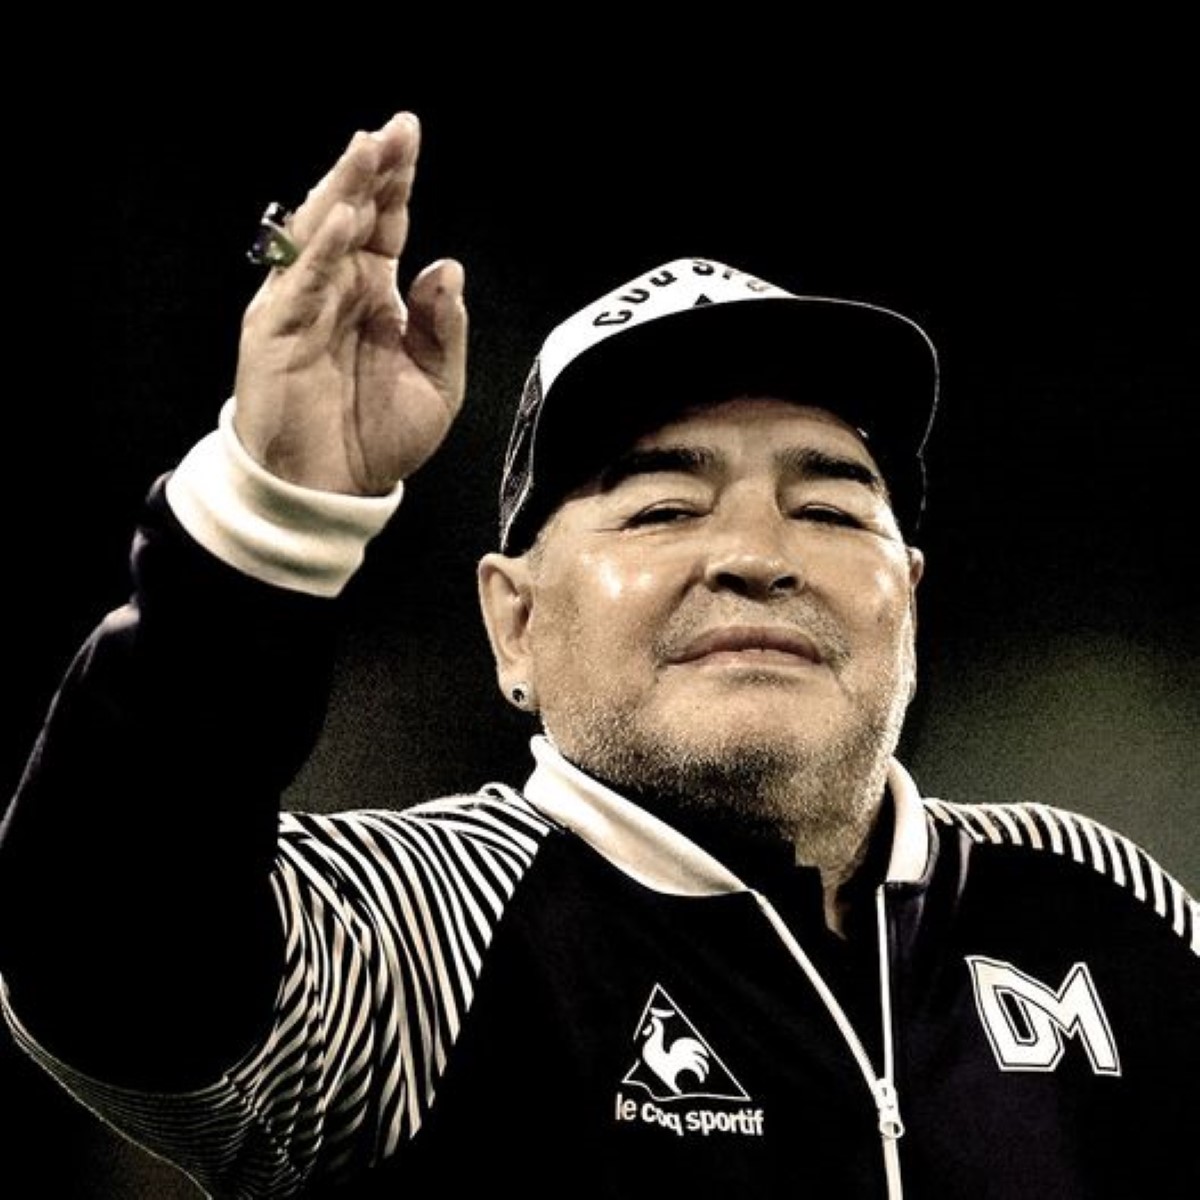 Légende du football, Diego Maradona est mort à 60 ans